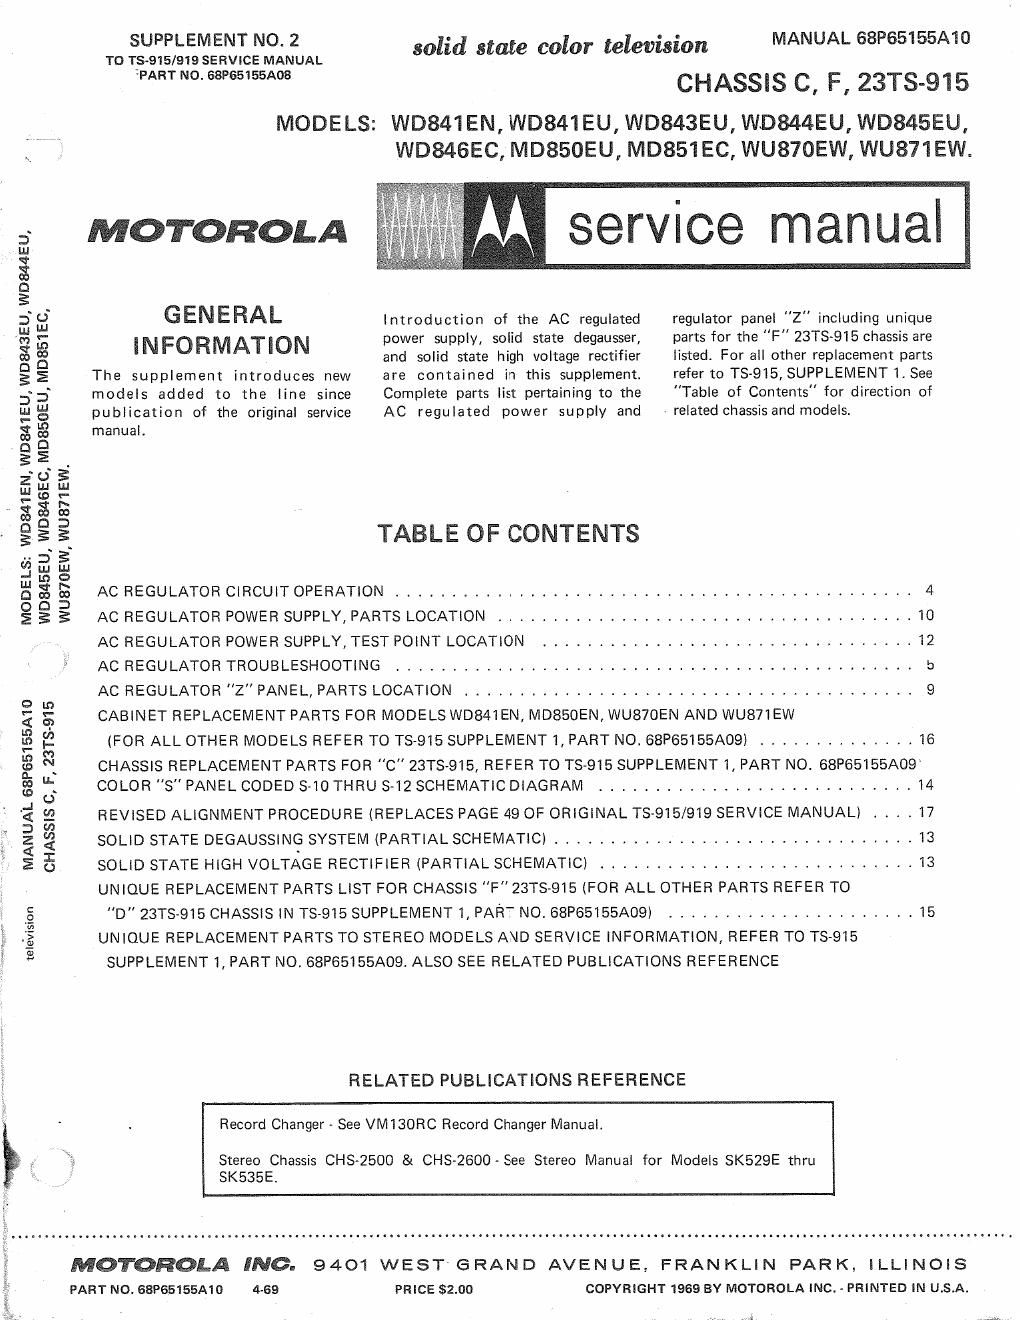 motorola wu 870 ew service manual